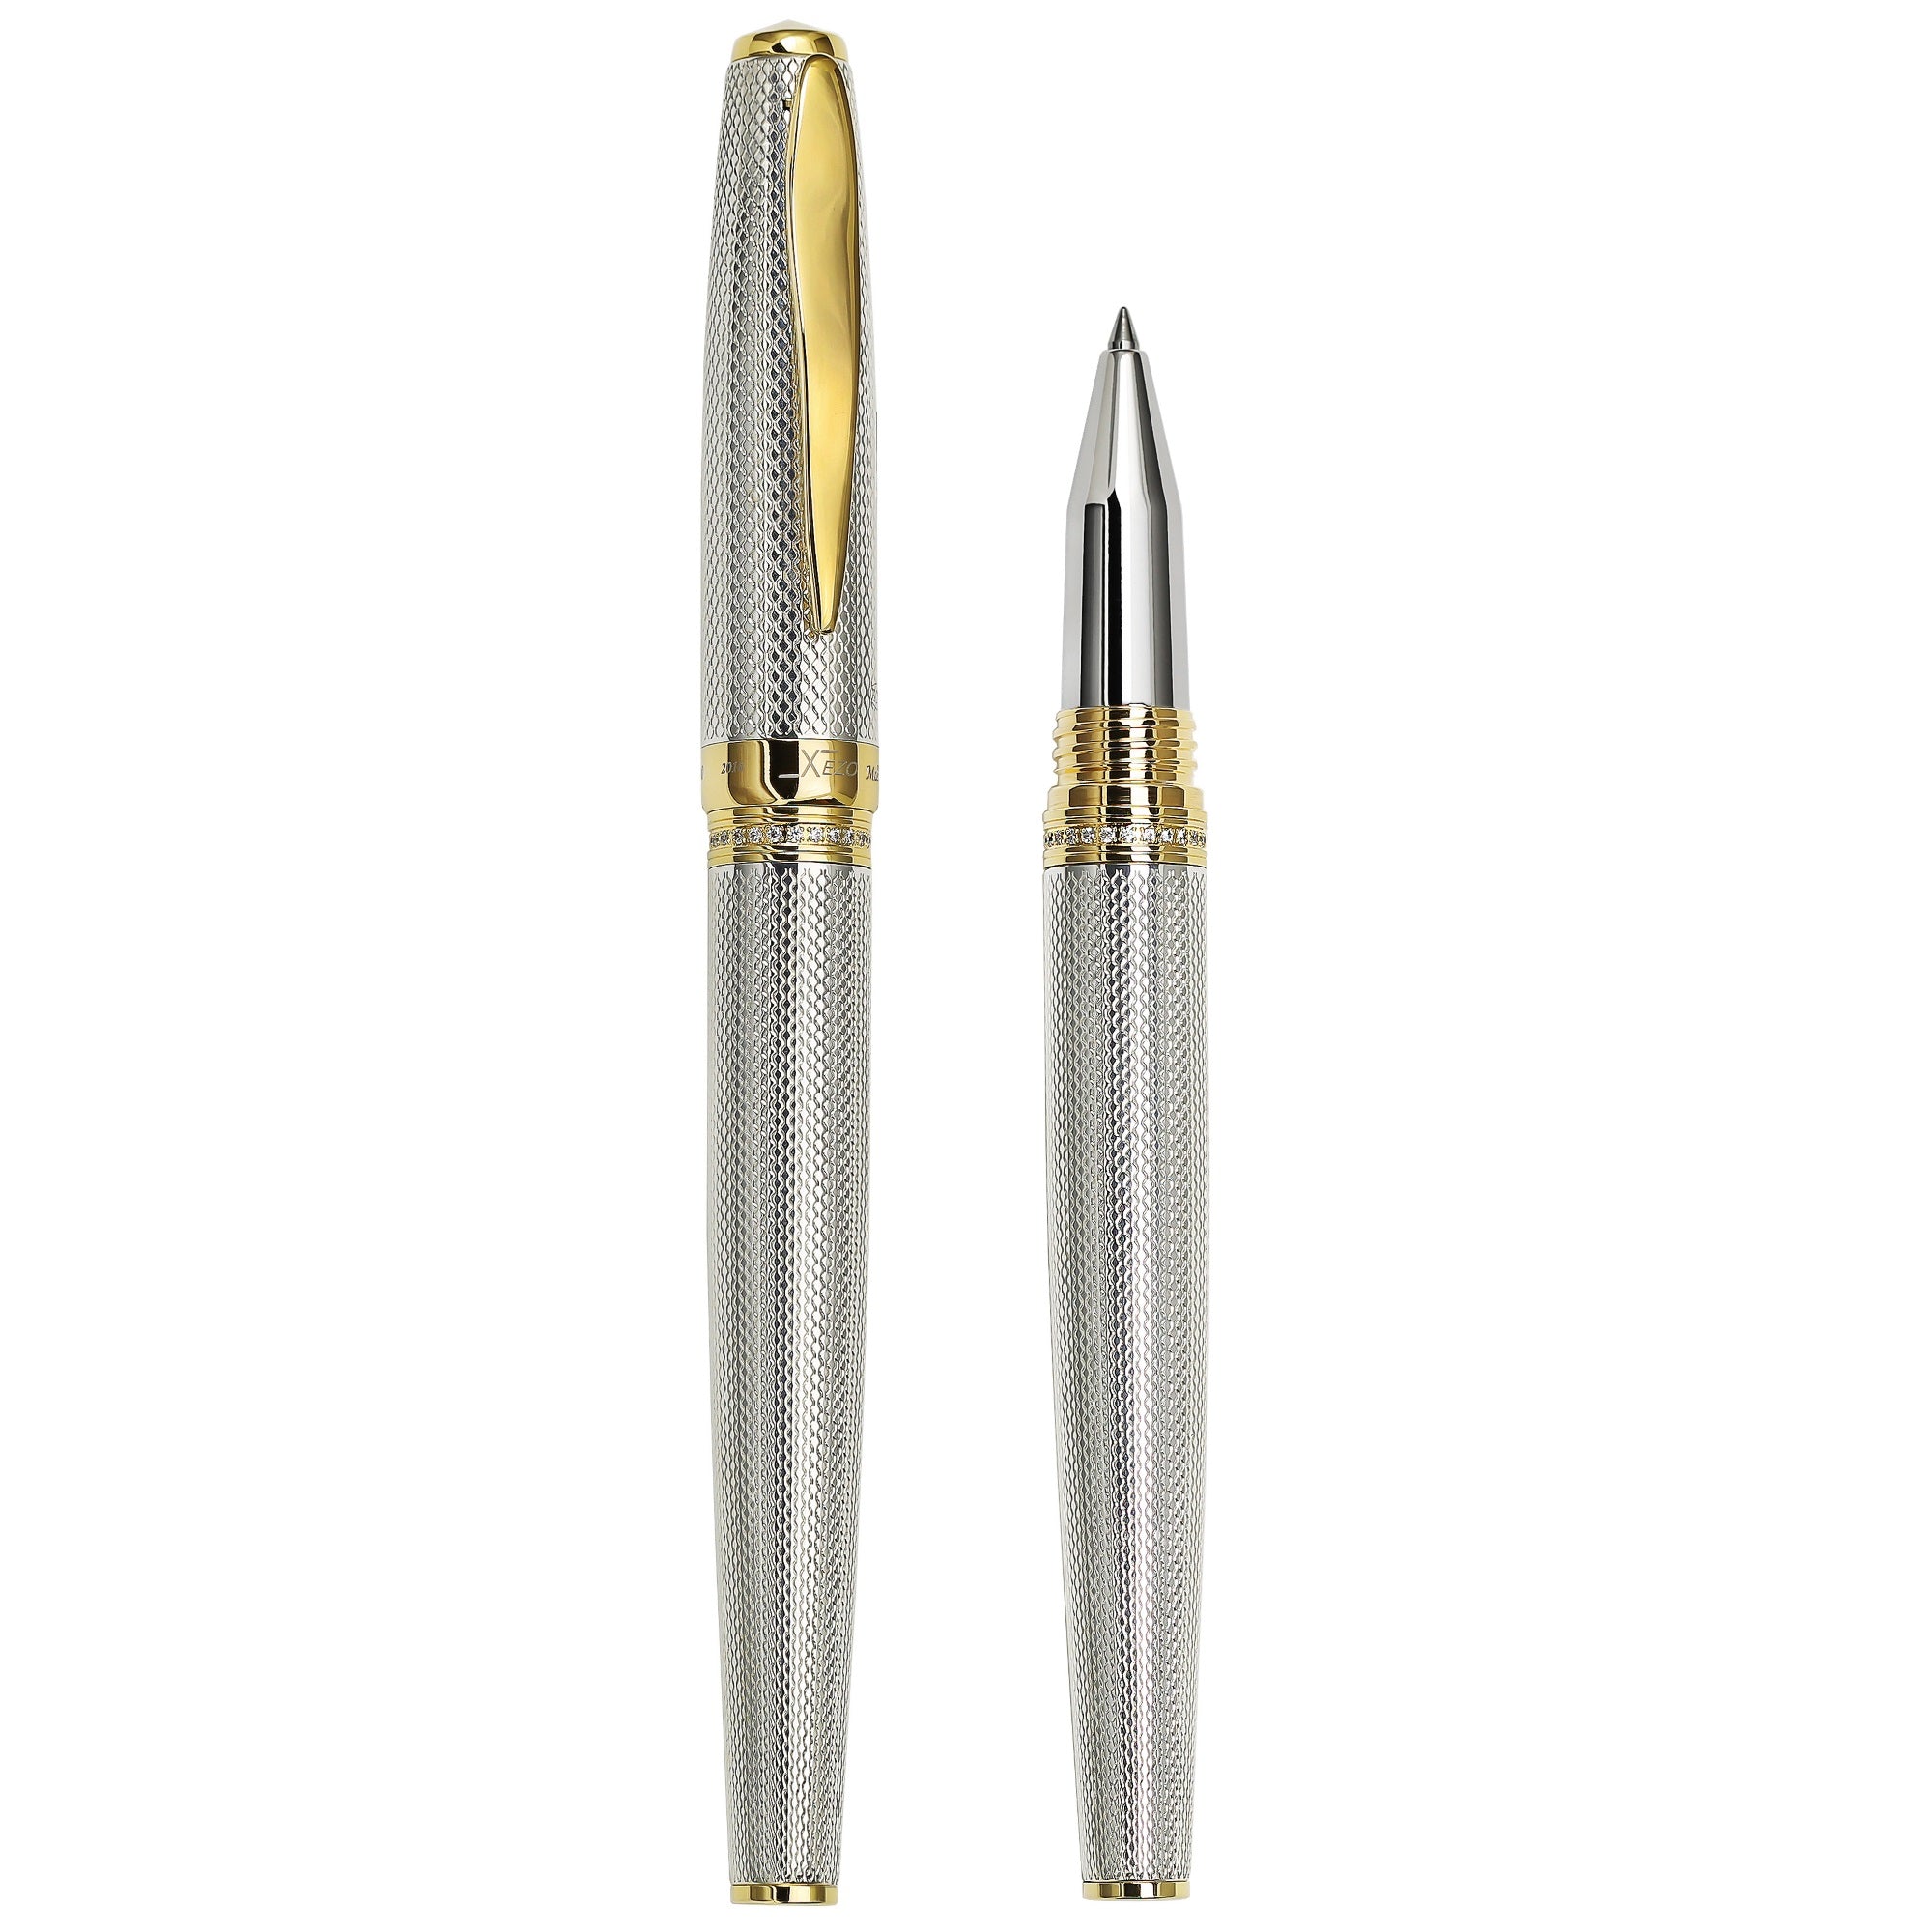 Maestro® 925 Sterling Silver Rollerball Pen - Swarovski Crystal Accents